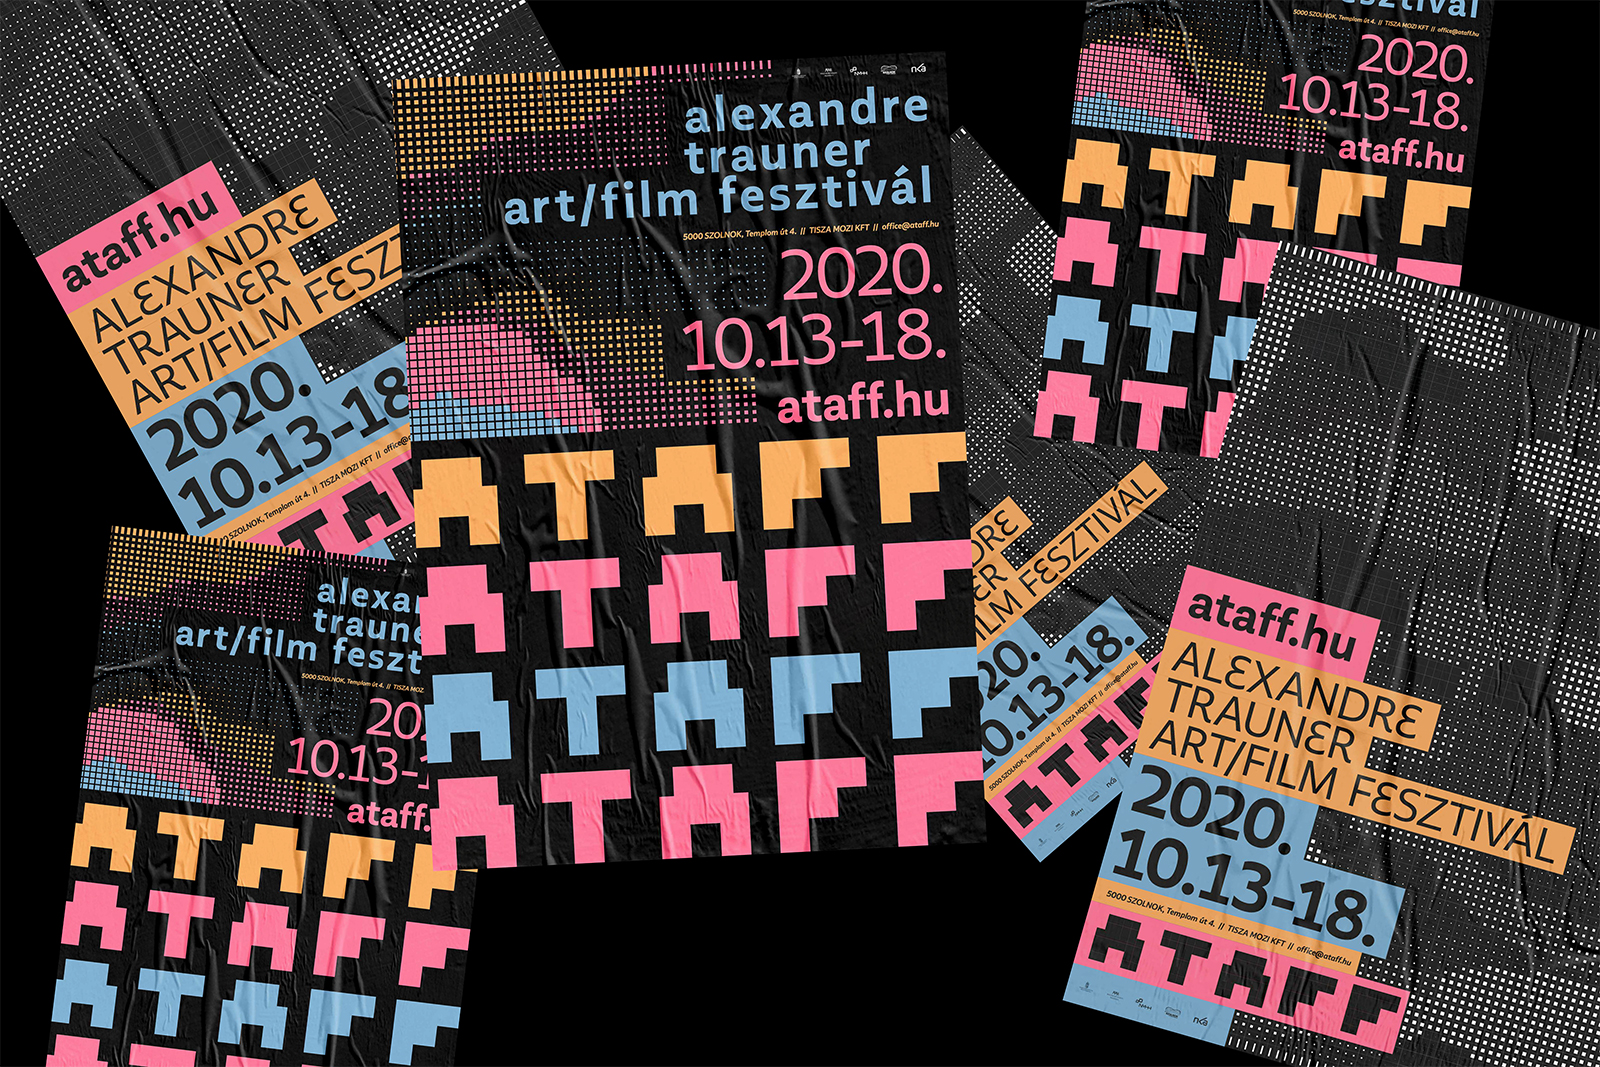 Péter Morvai - graphic designer's won the design tender of ATAFF